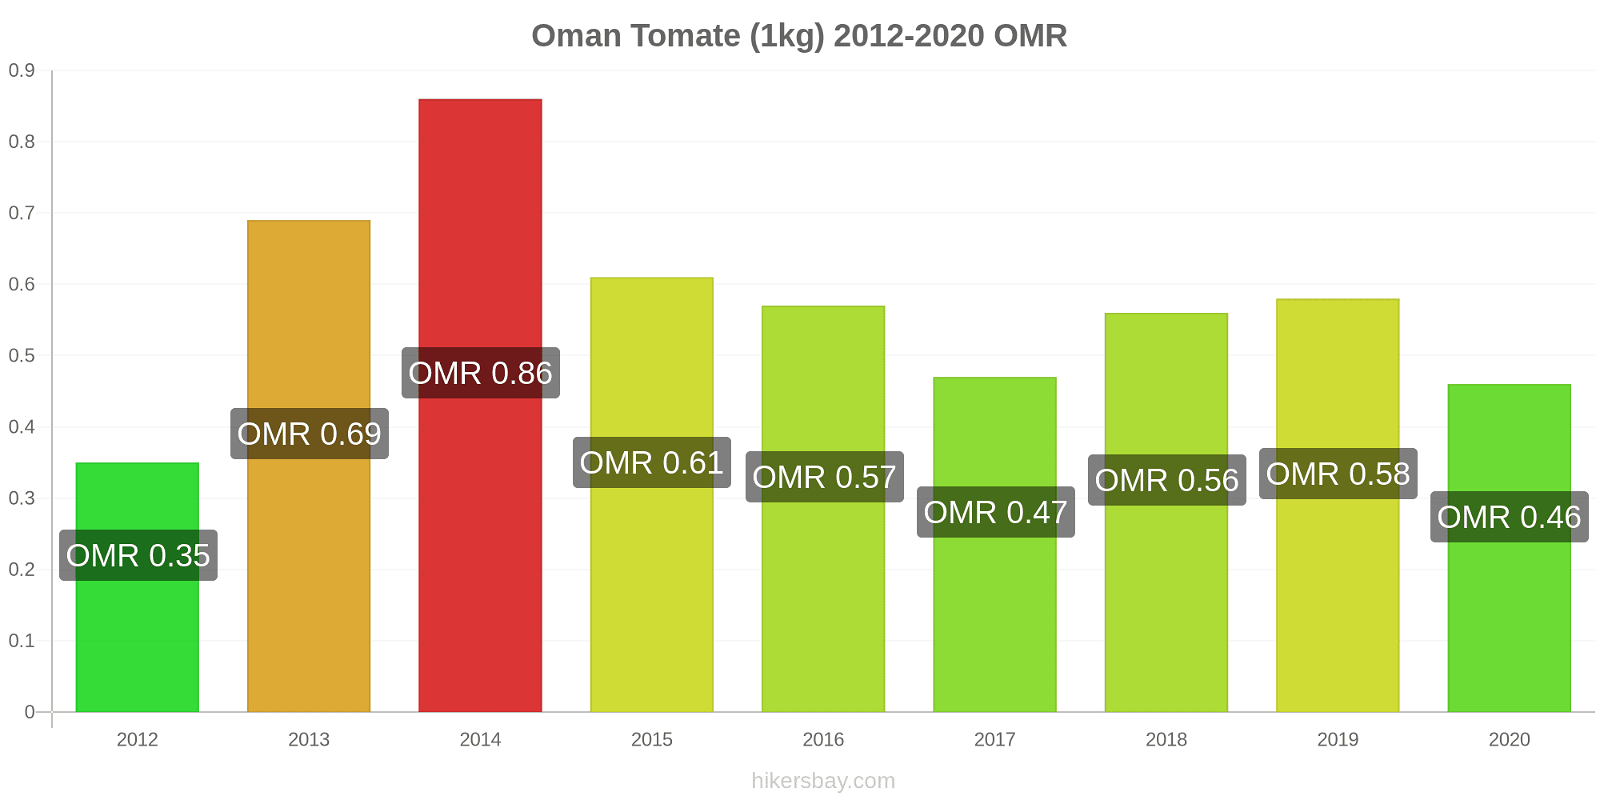 Oman changements de prix Tomate (1kg) hikersbay.com